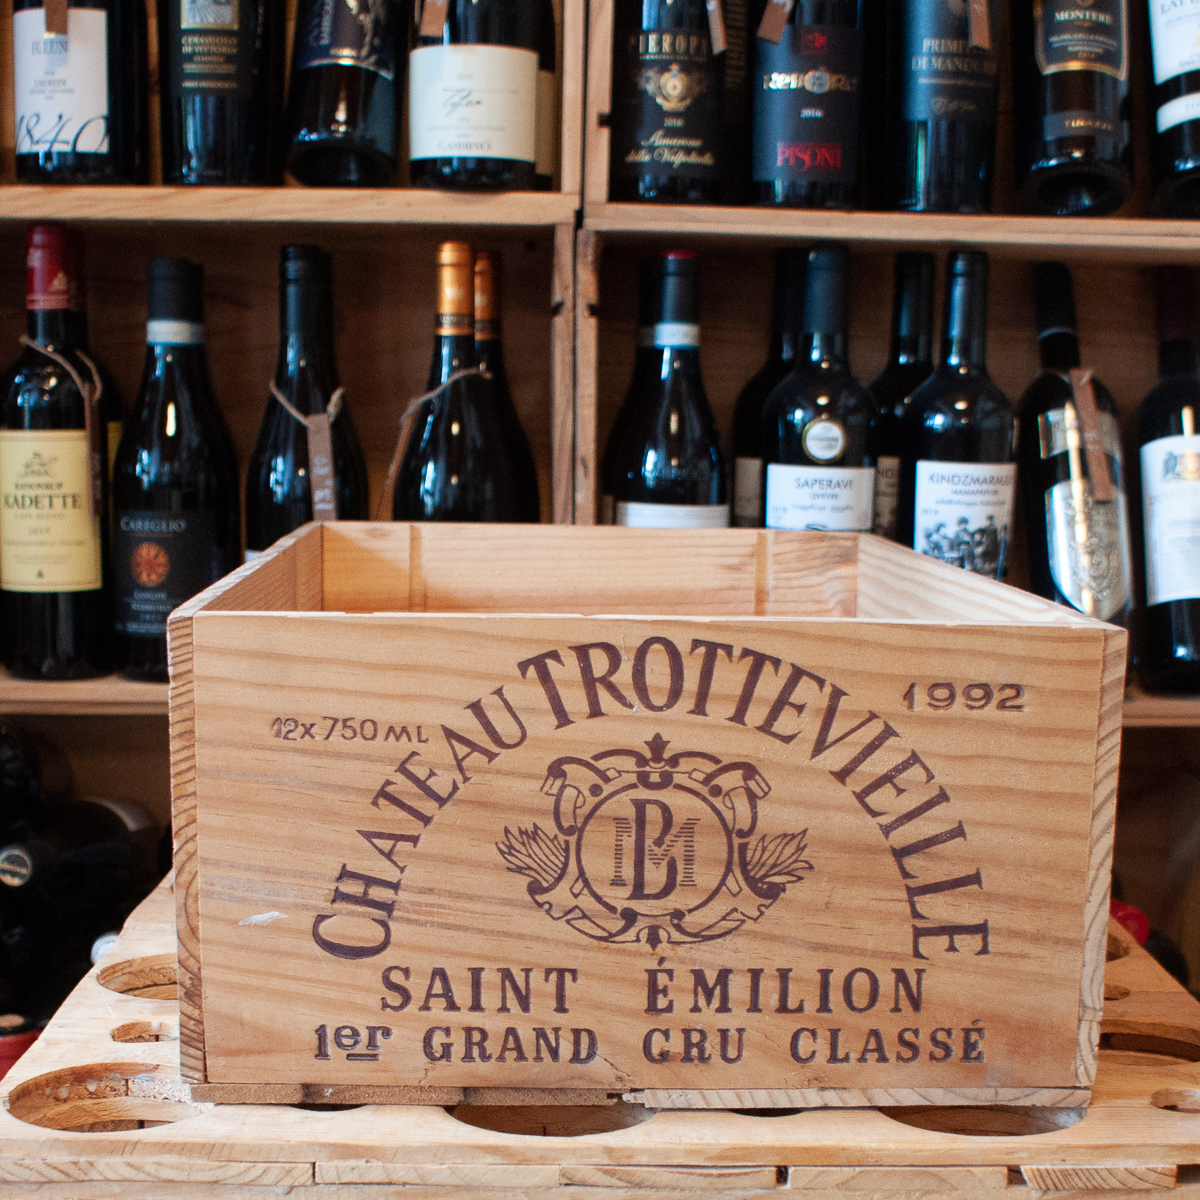 Original wine wooden case for 12 bottles from Château Trotteveille 1992